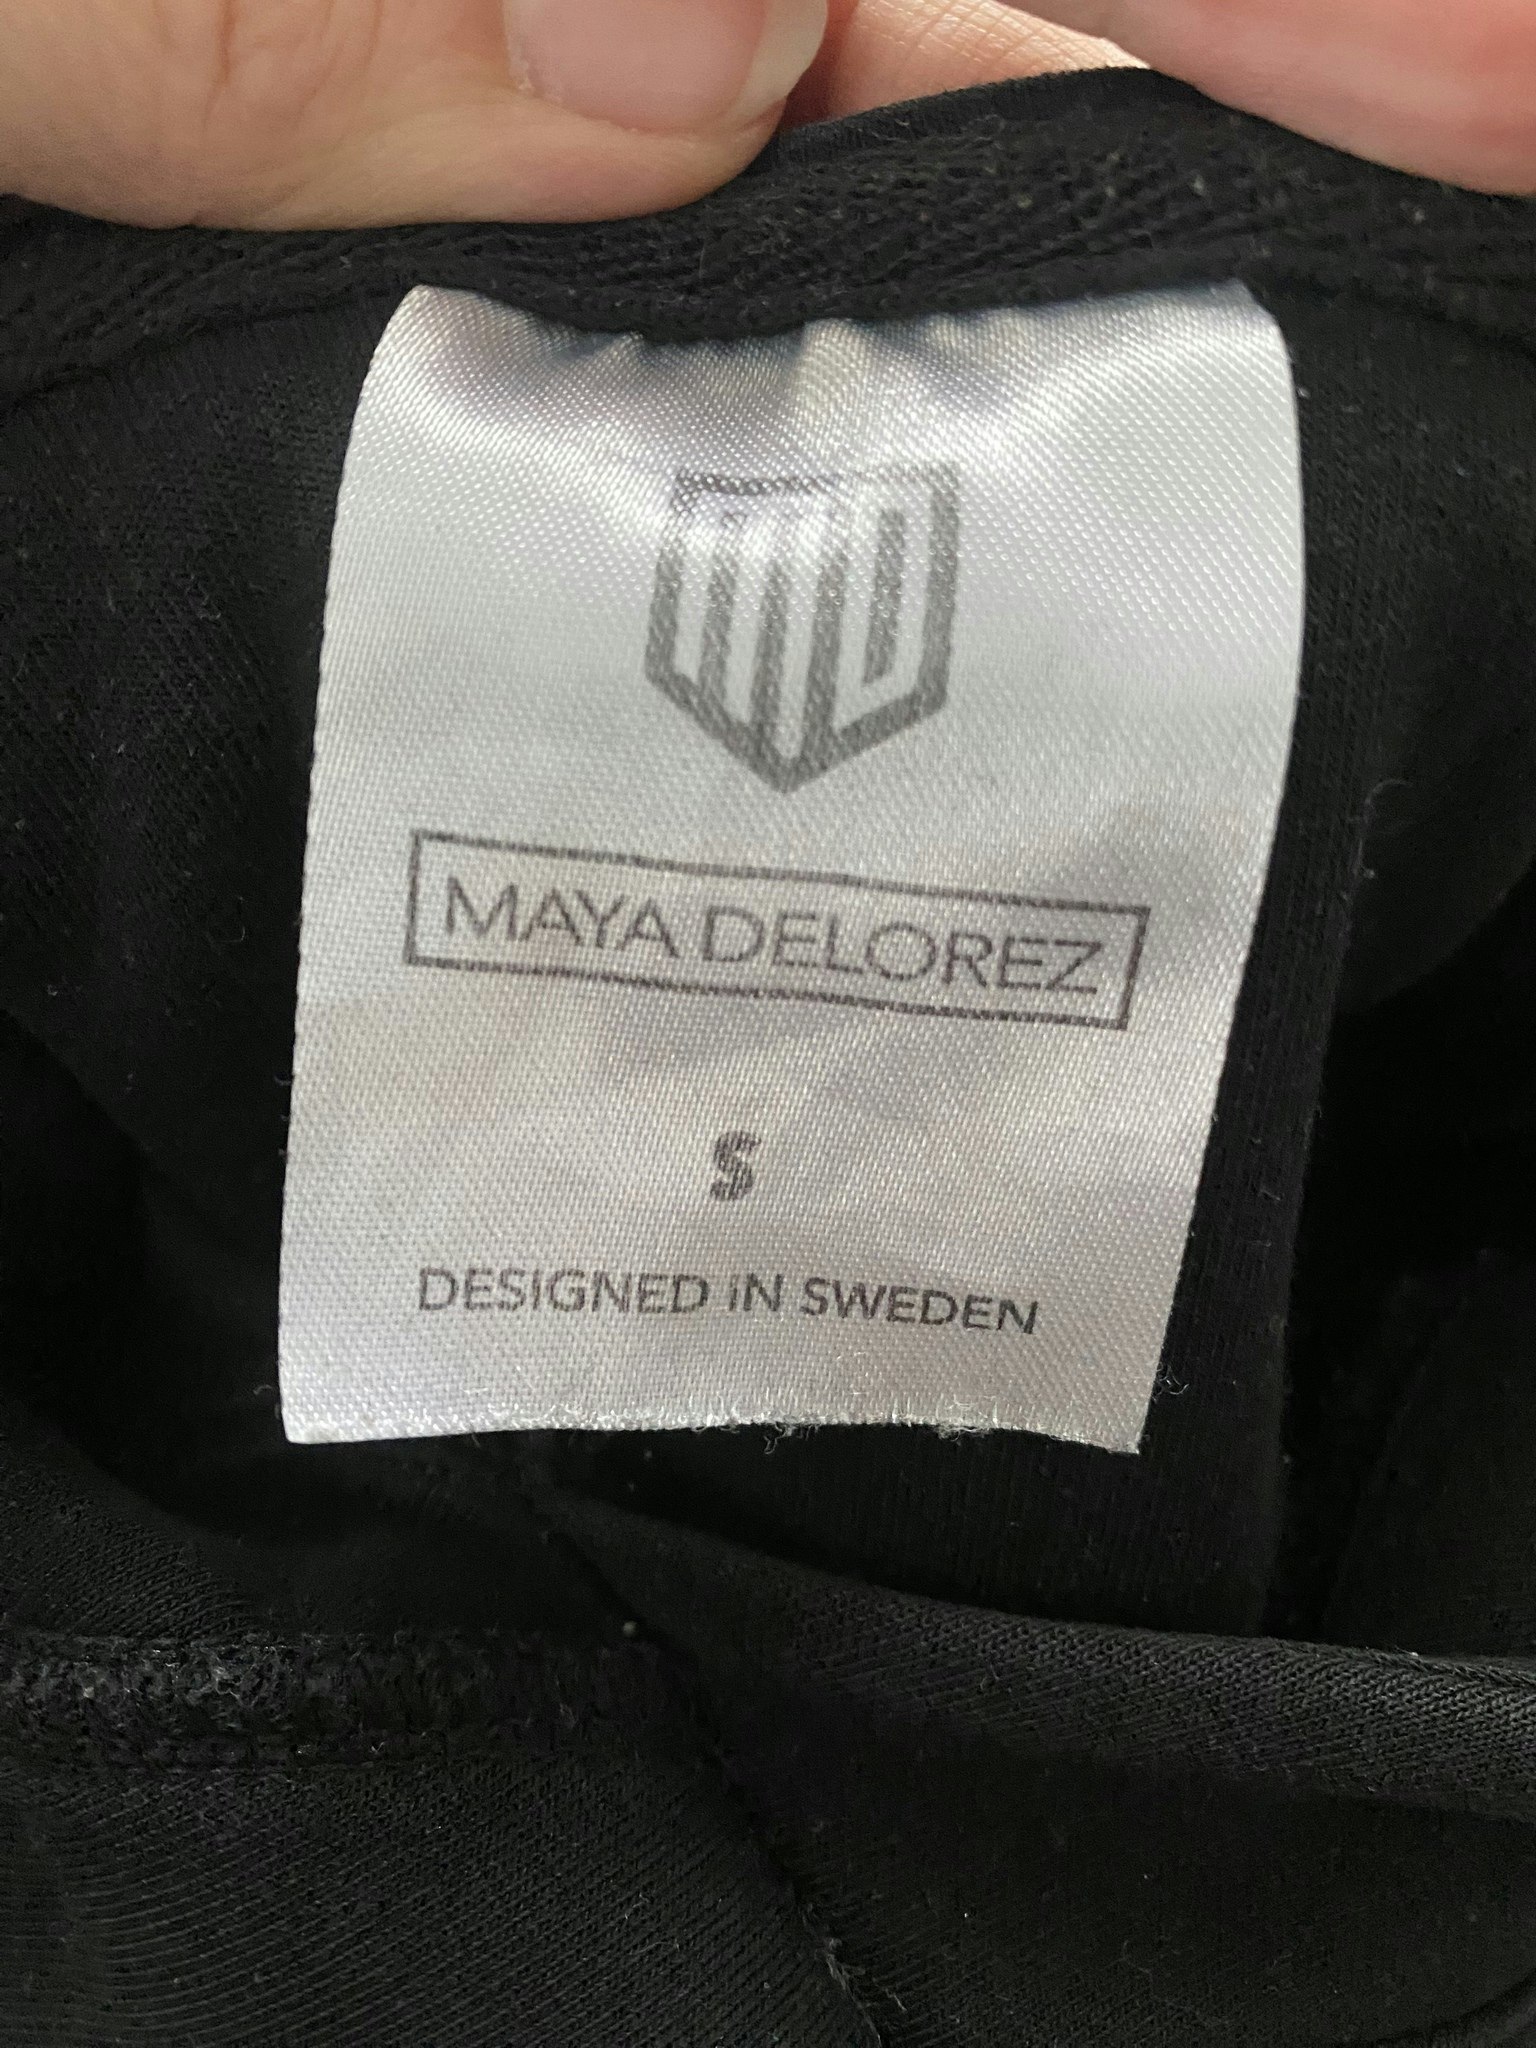 Maya Delorez hoodie, S